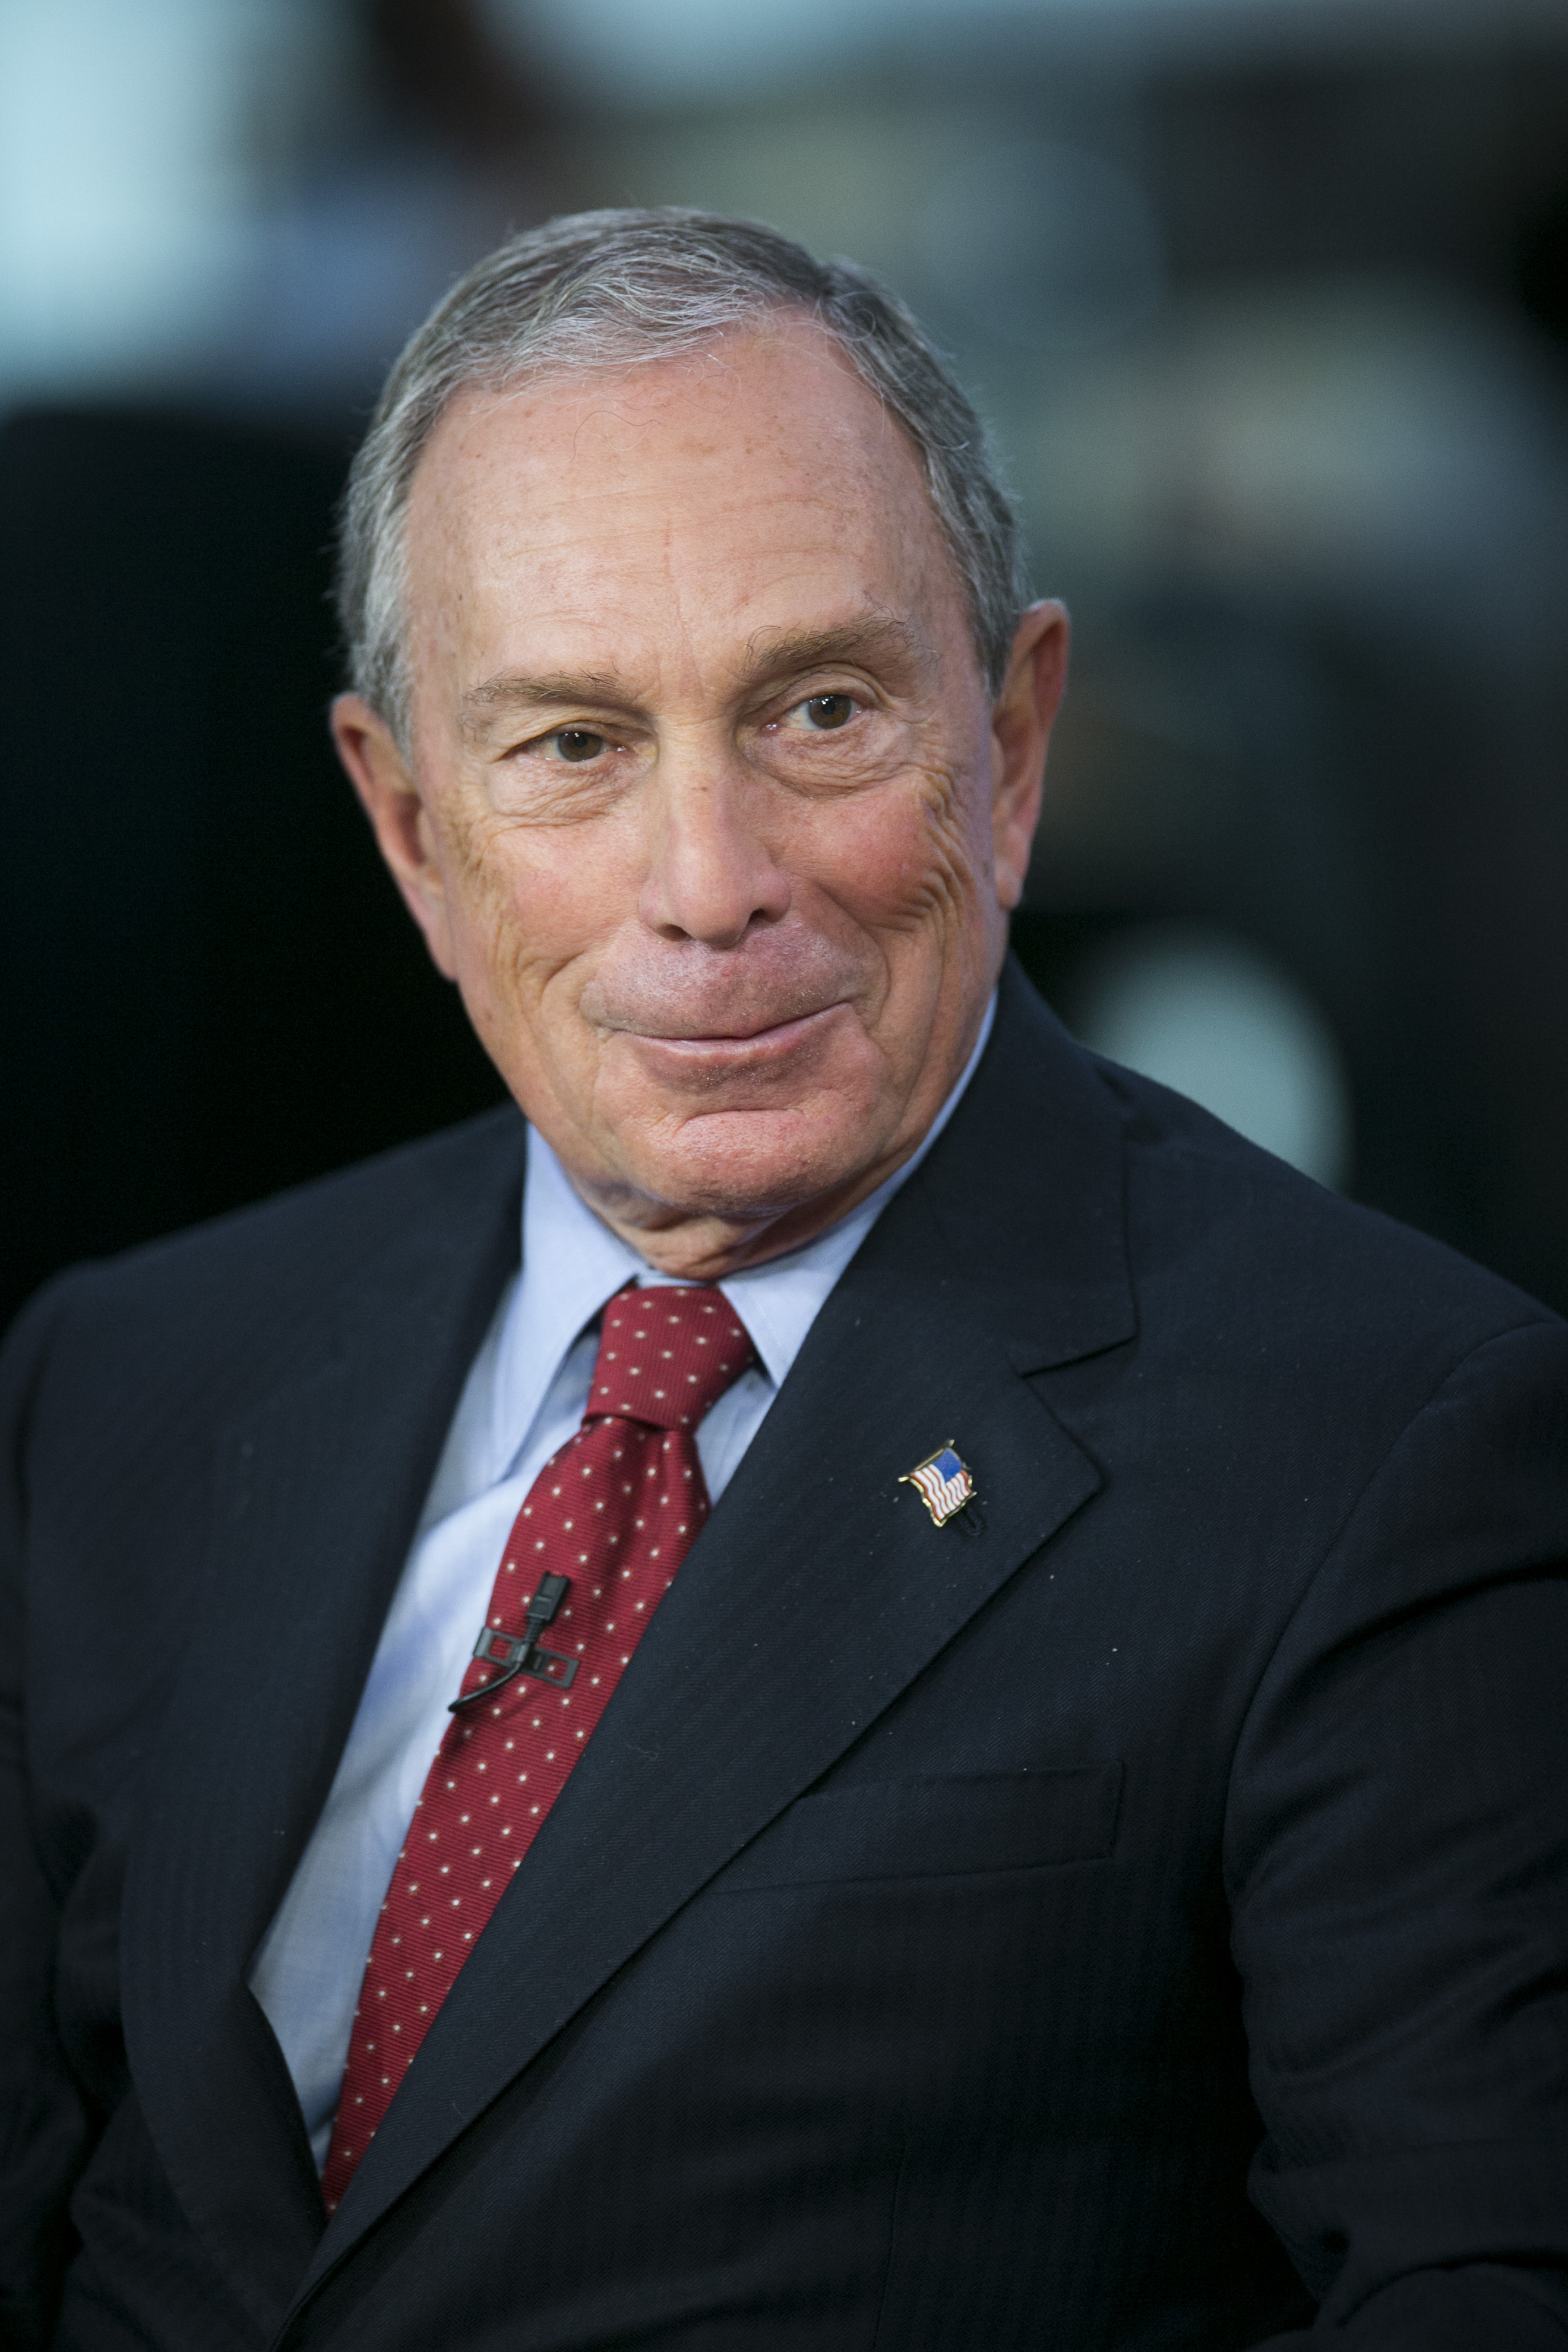 Michael Bloomberg Interview